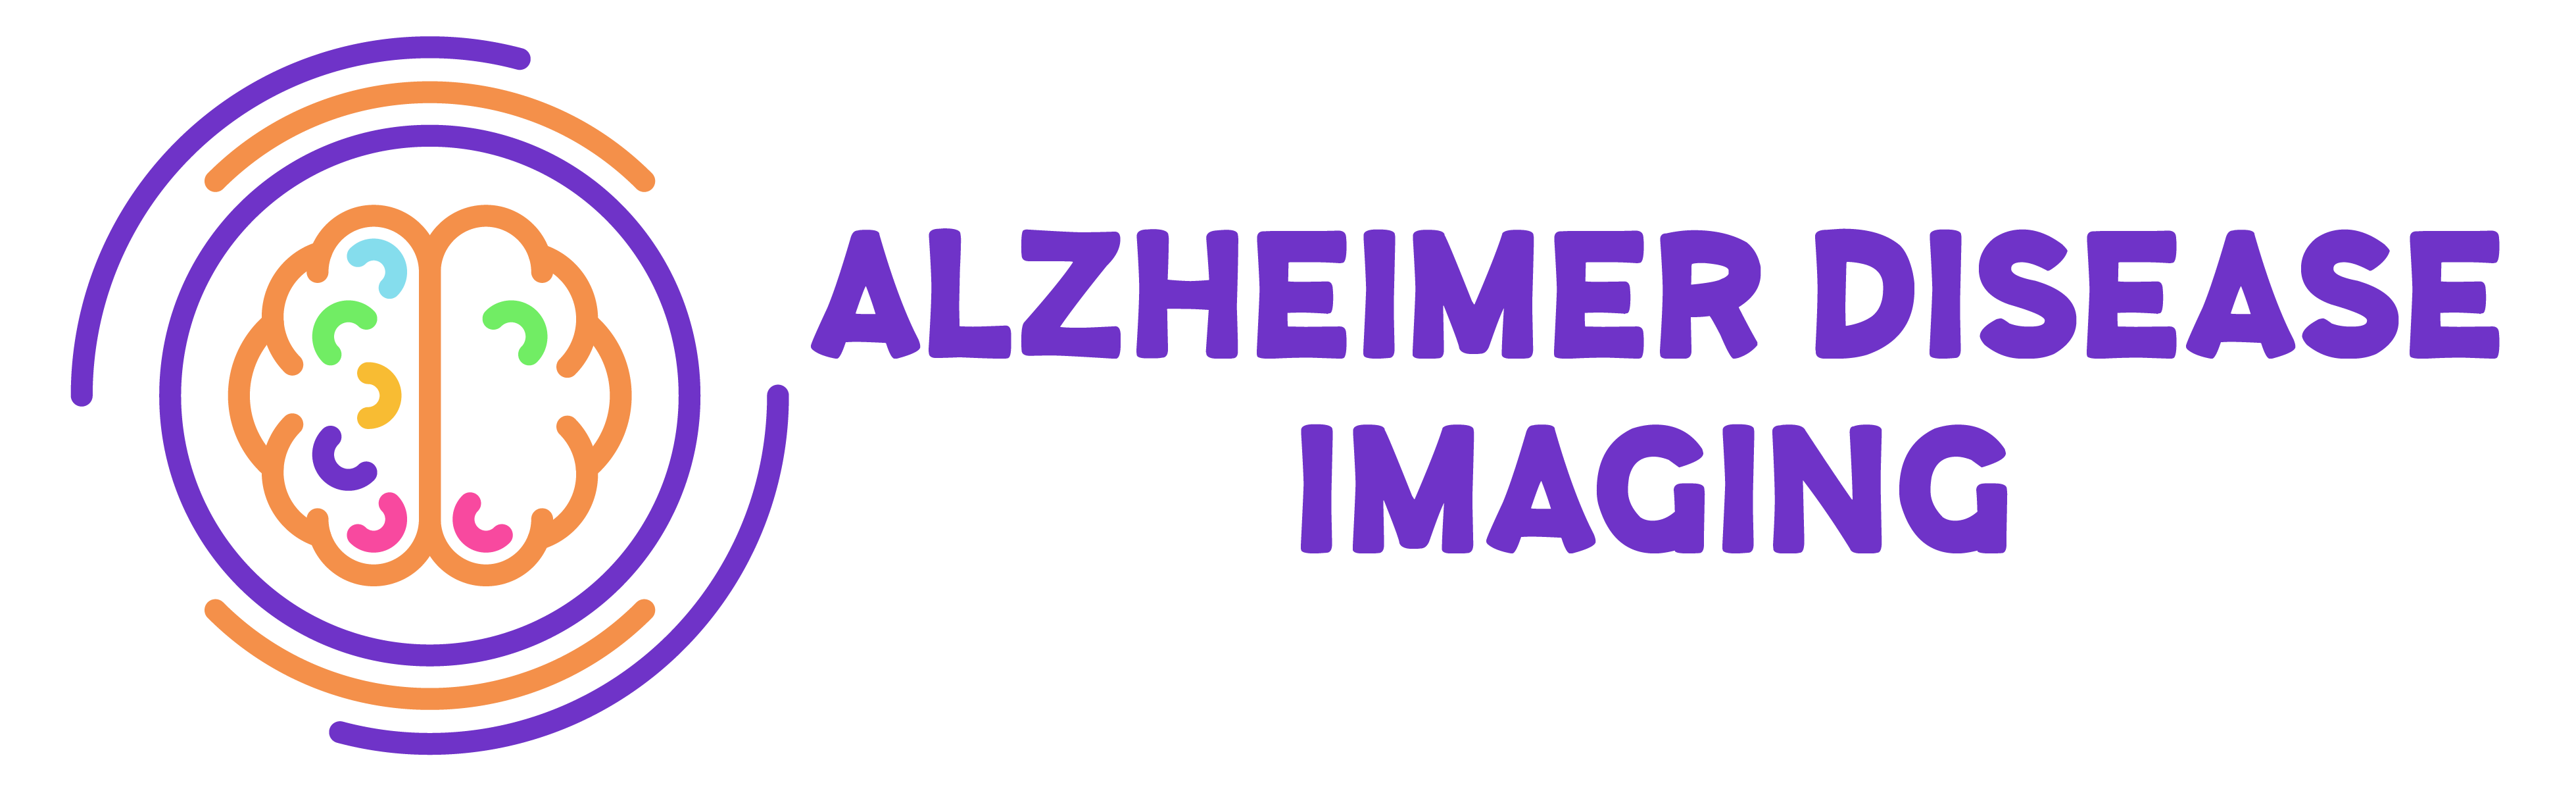 Alzheimer Disease Imaging Maryland